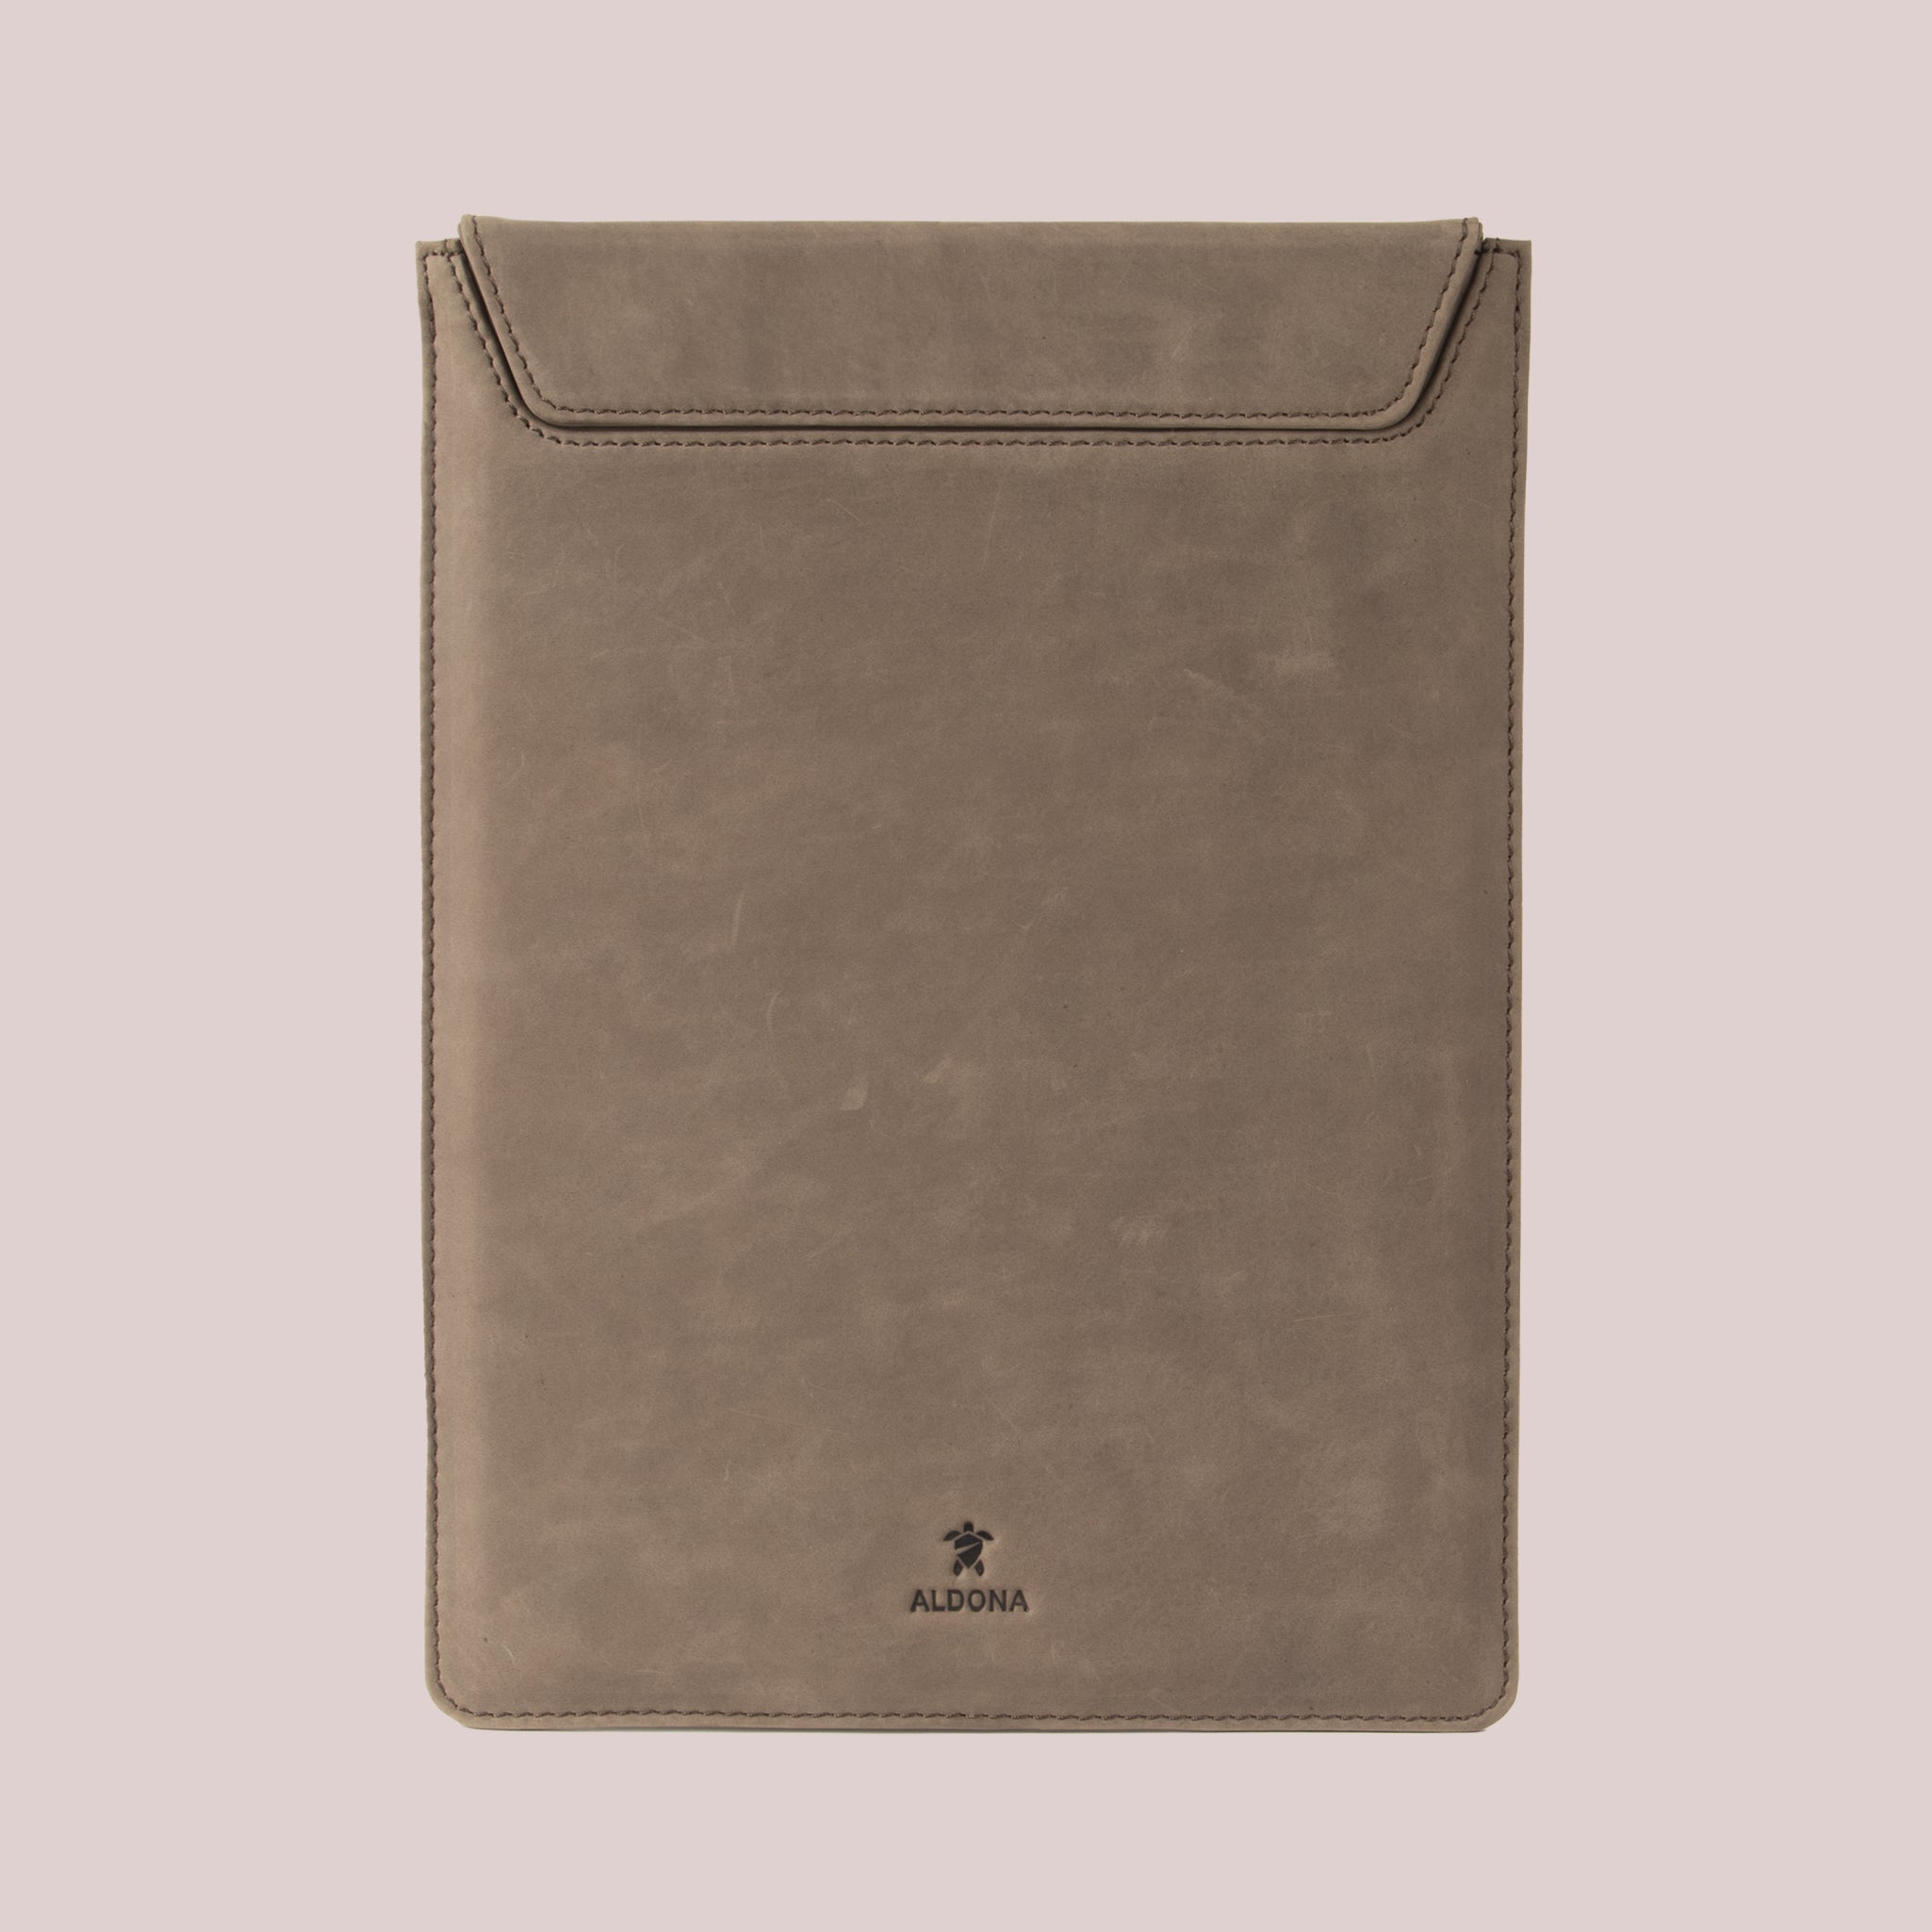 Macbook leather case in tan color